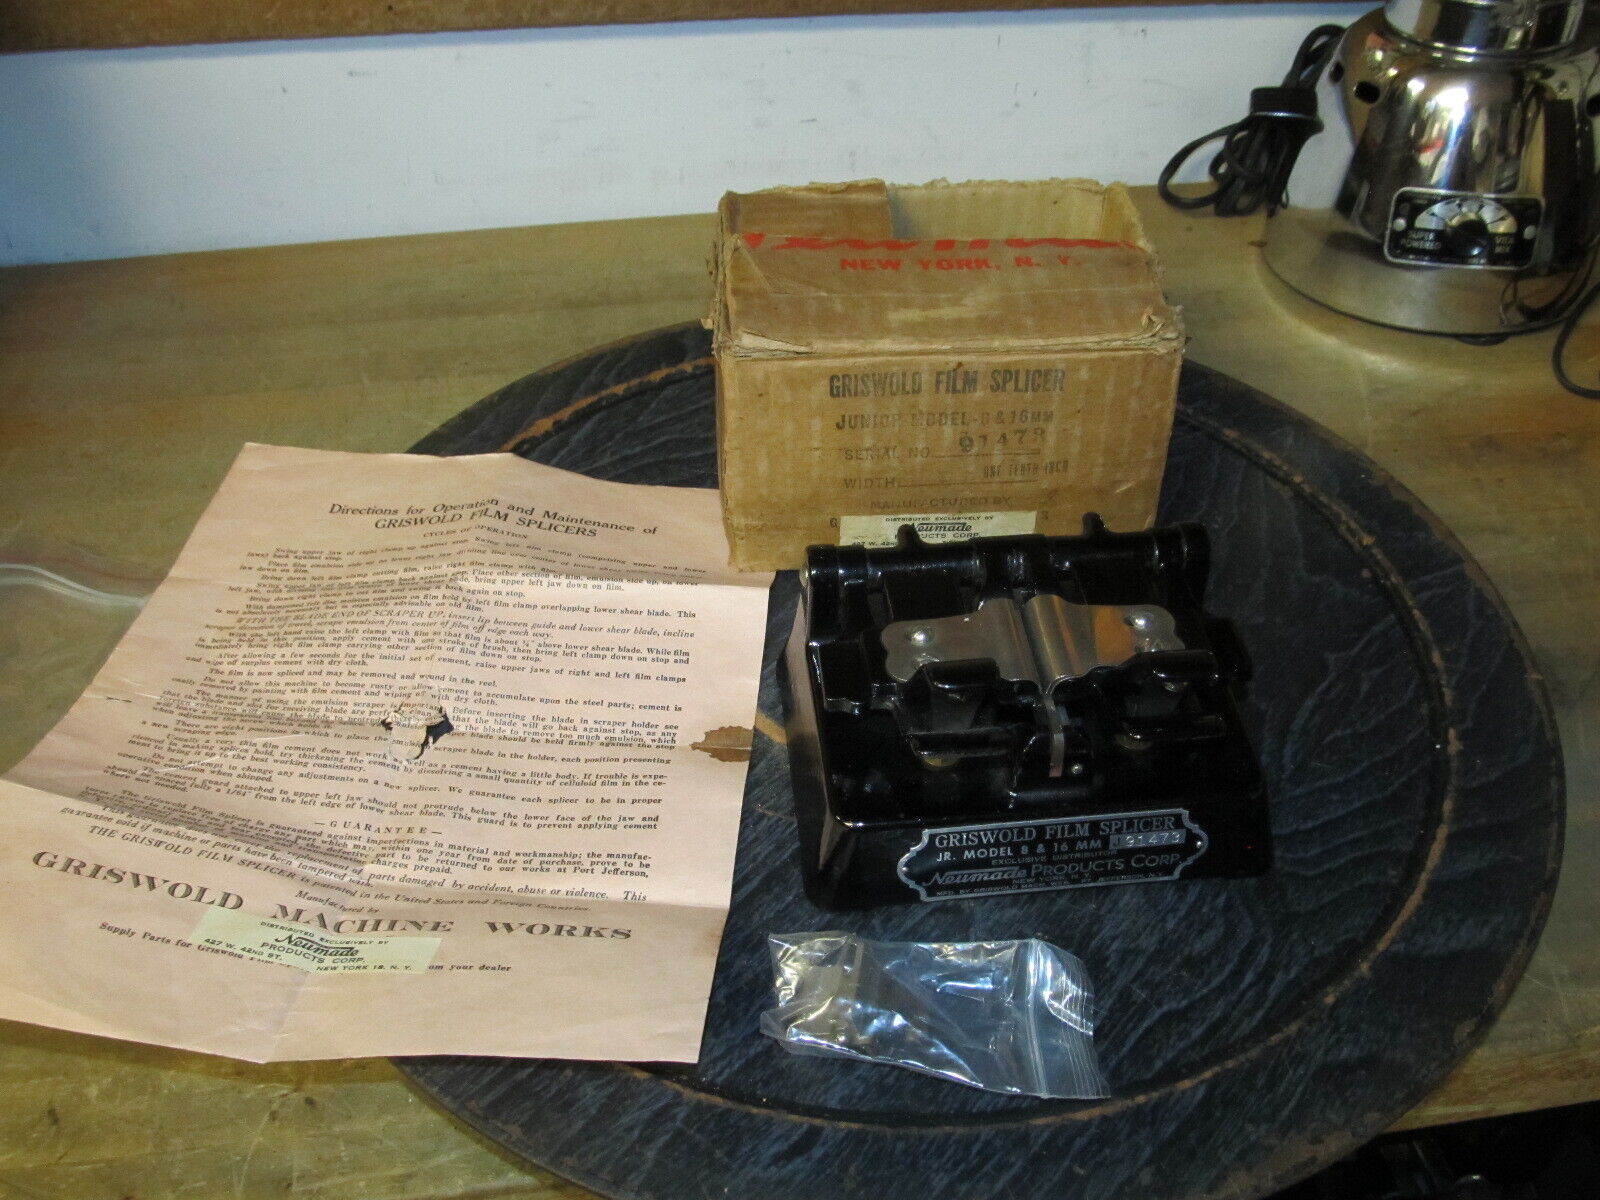 Vintage Griswold JR. 8 & 16 mm Film Splicer in Original Box, Neumade Products. 